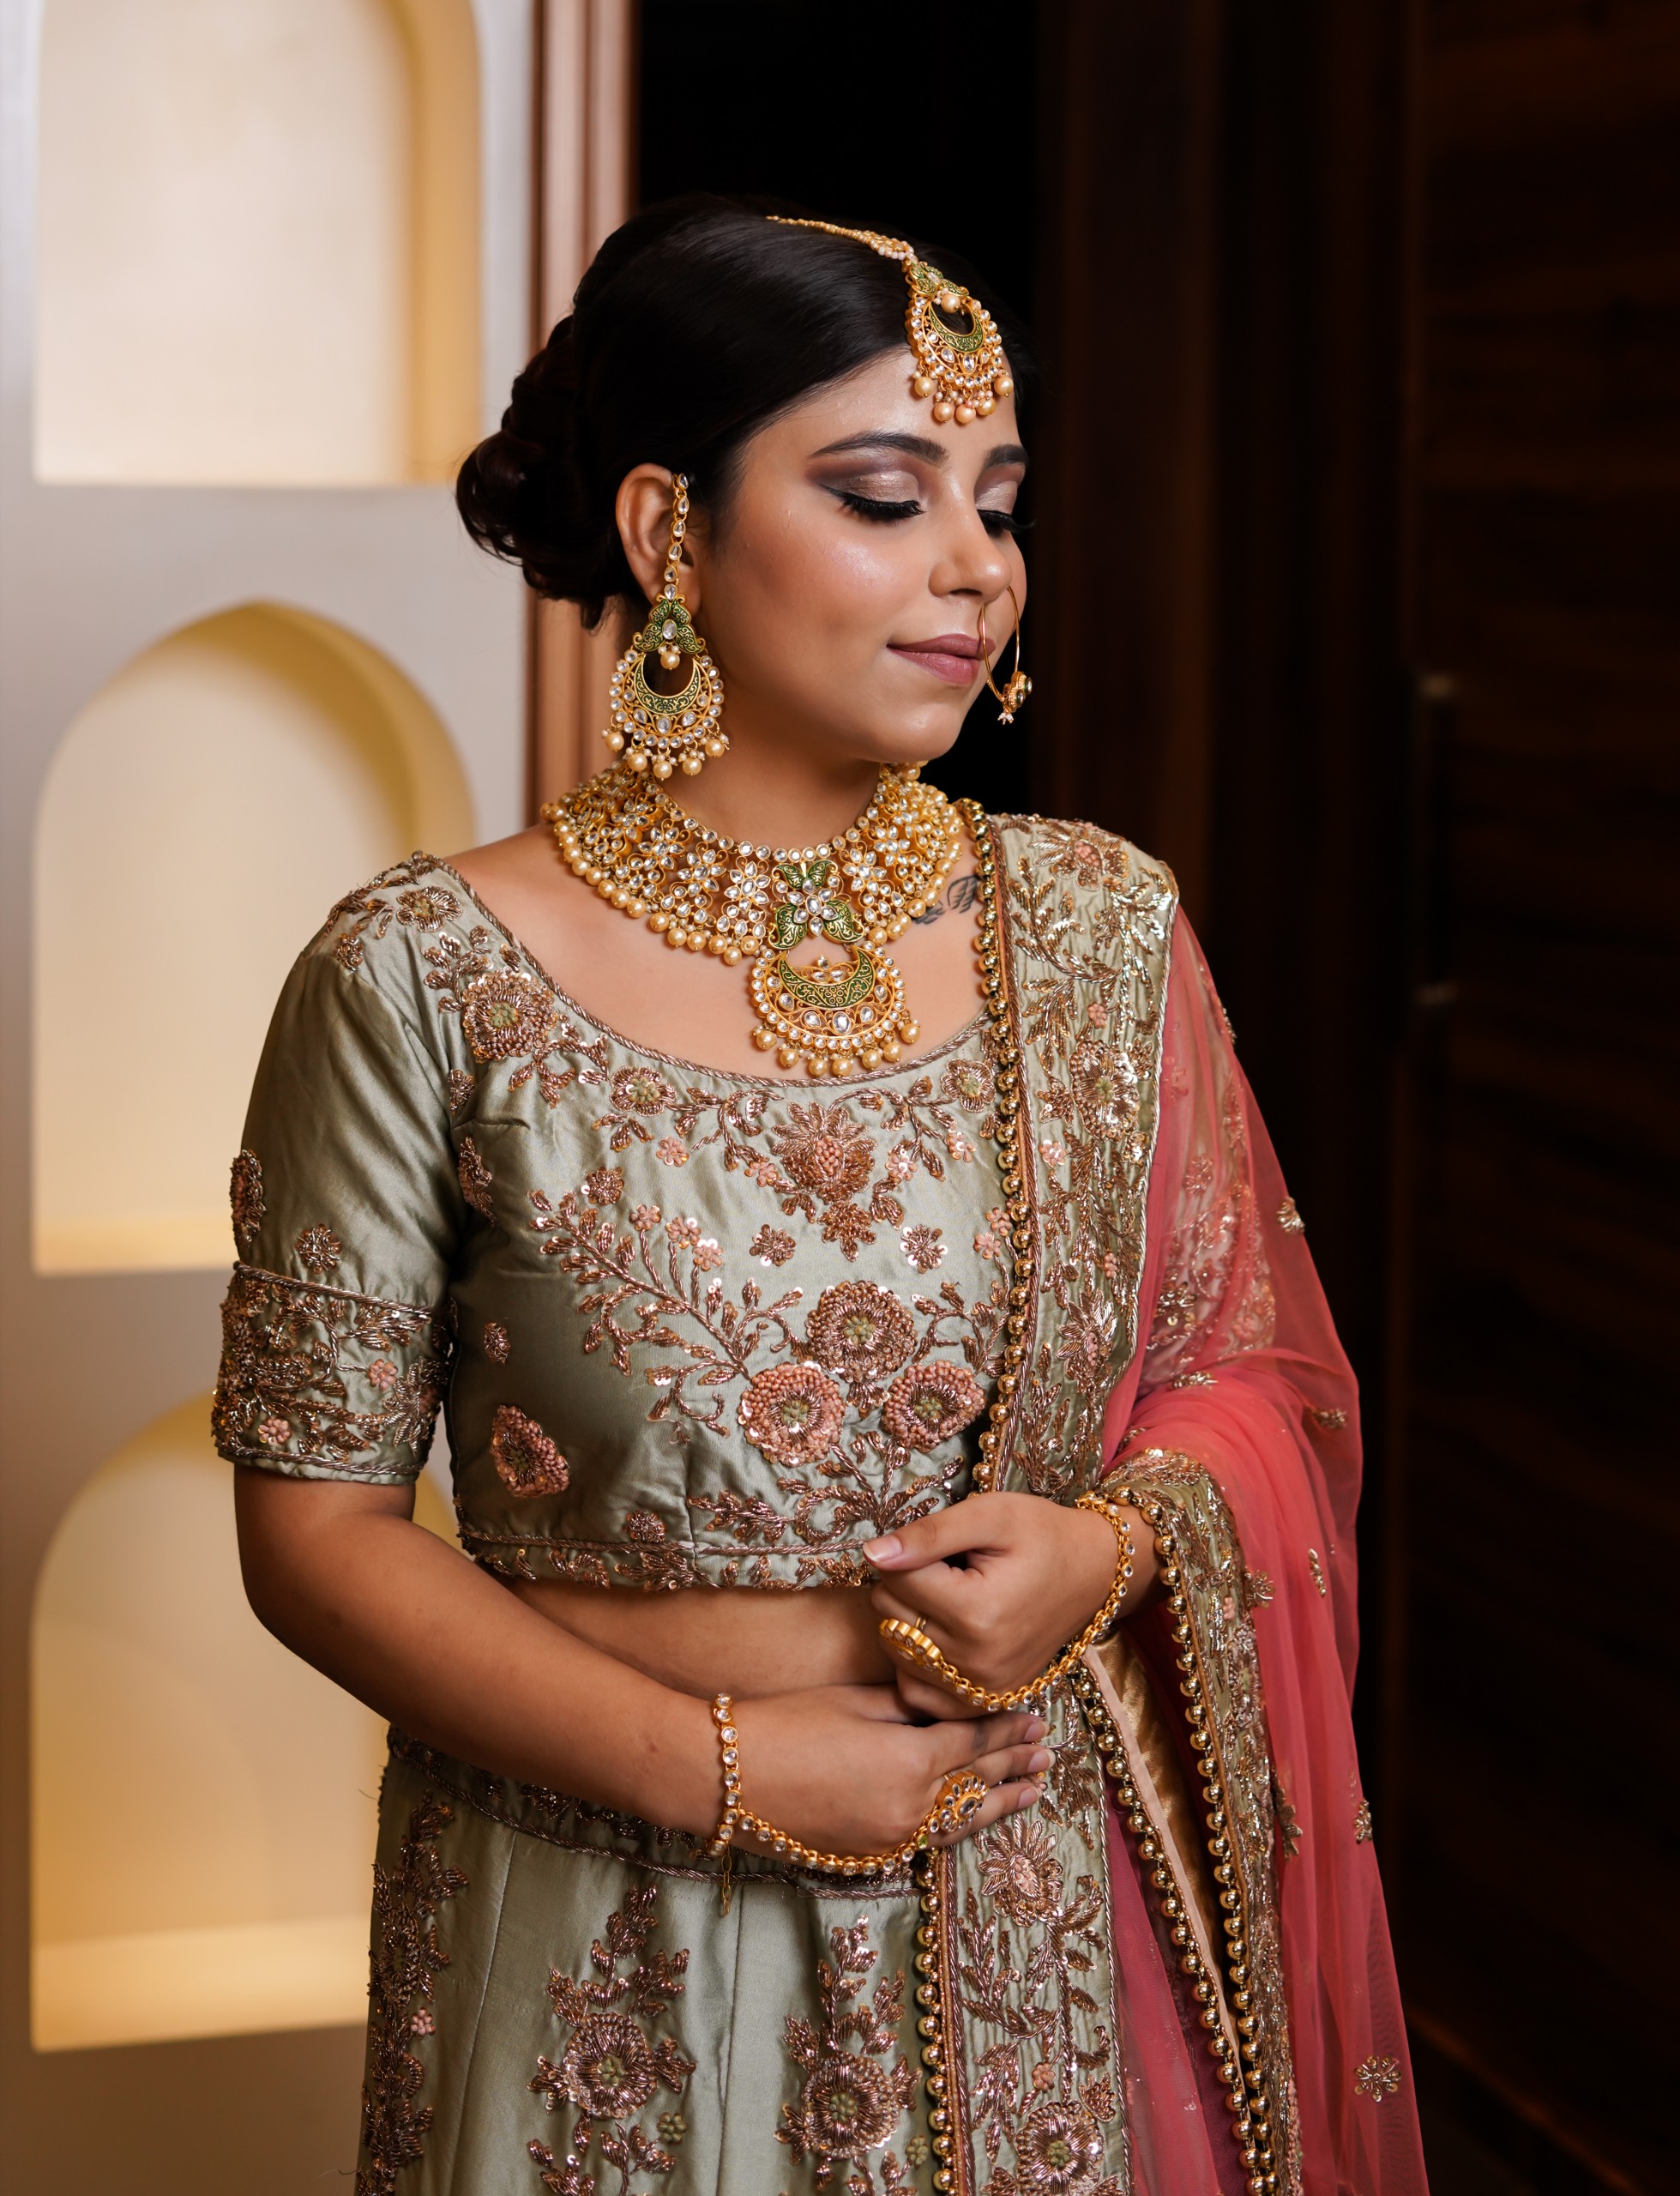 Stunning Indian bride model